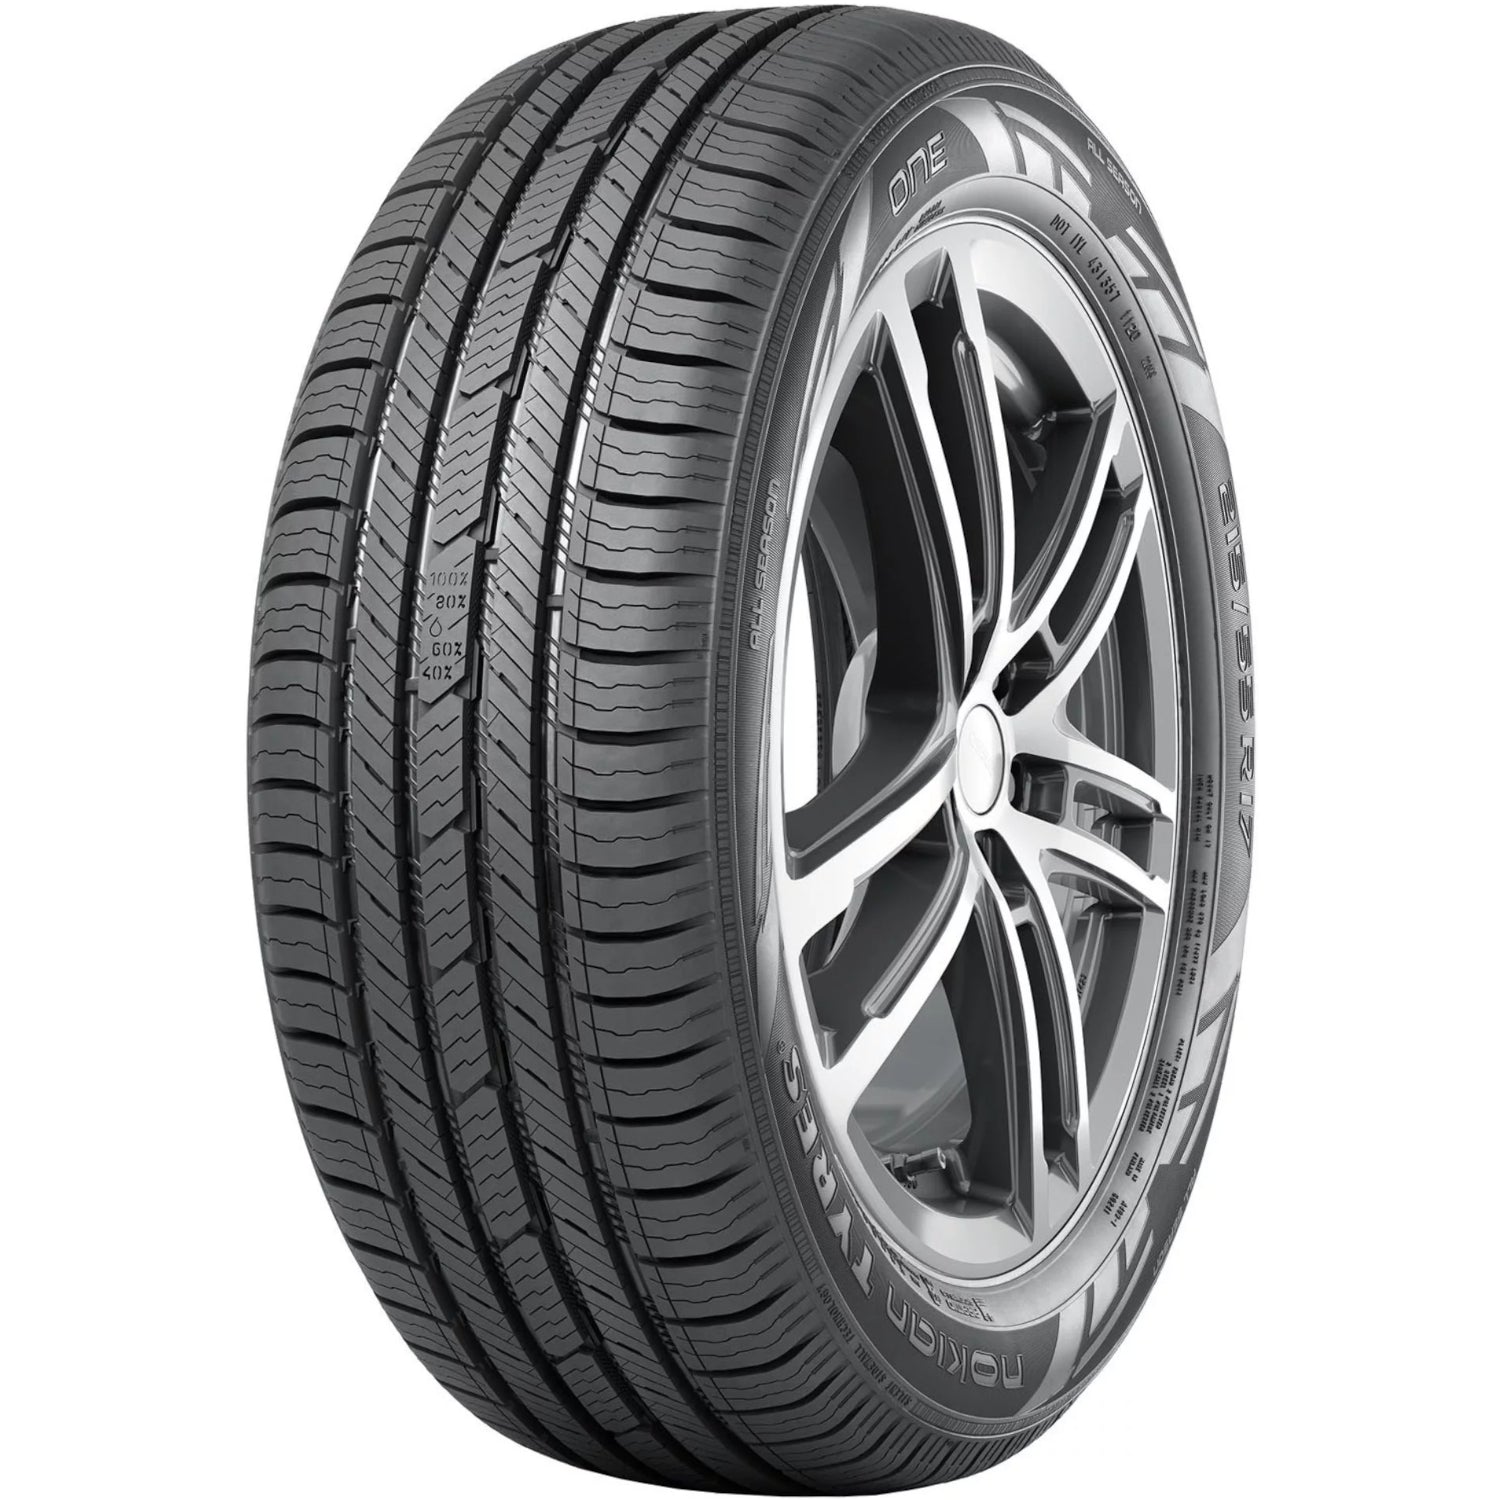 NOKIAN ONE 195/65R15 (25X7.7R 15) Tires